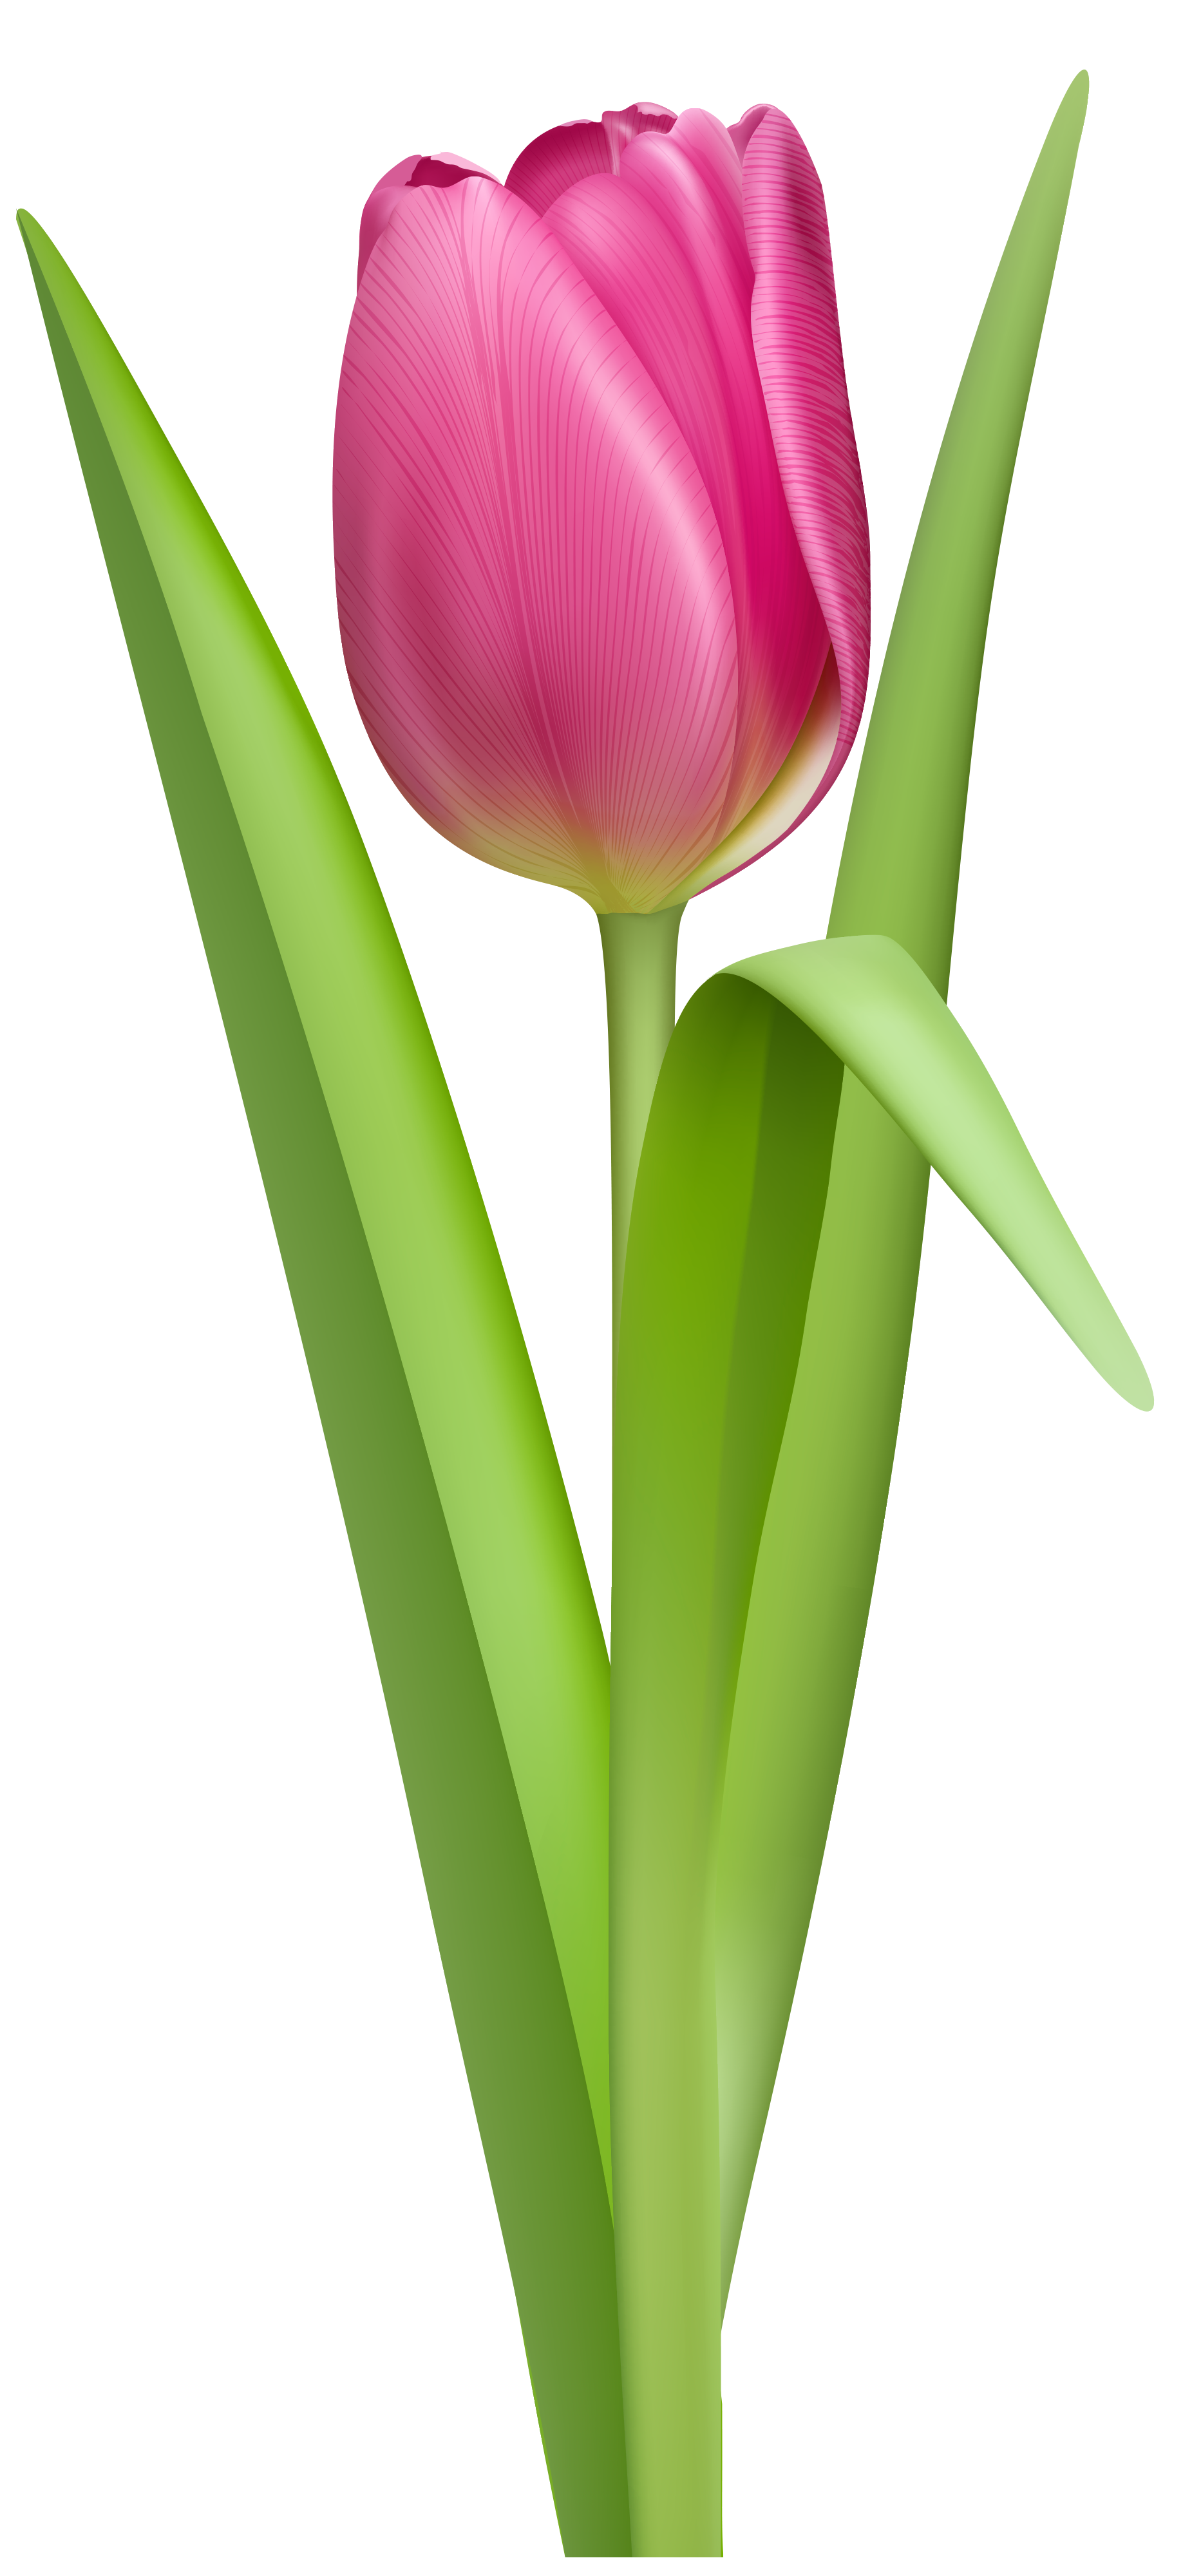 Clipart flower tulip. No background cliparts pinterest